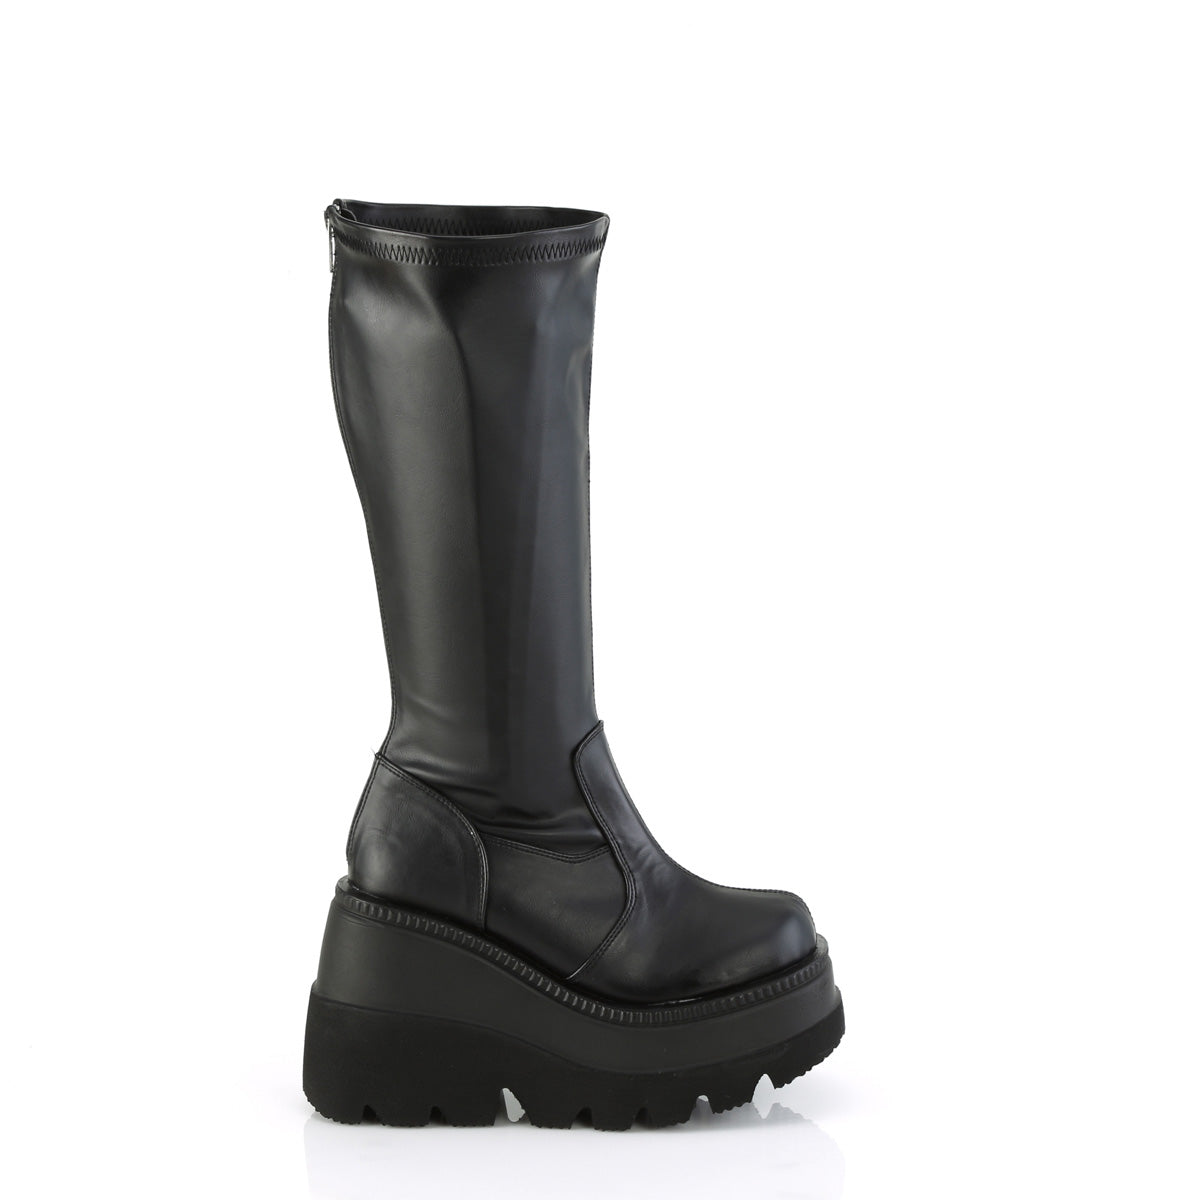 goth wide calf boots - Demonia shaker-65wc